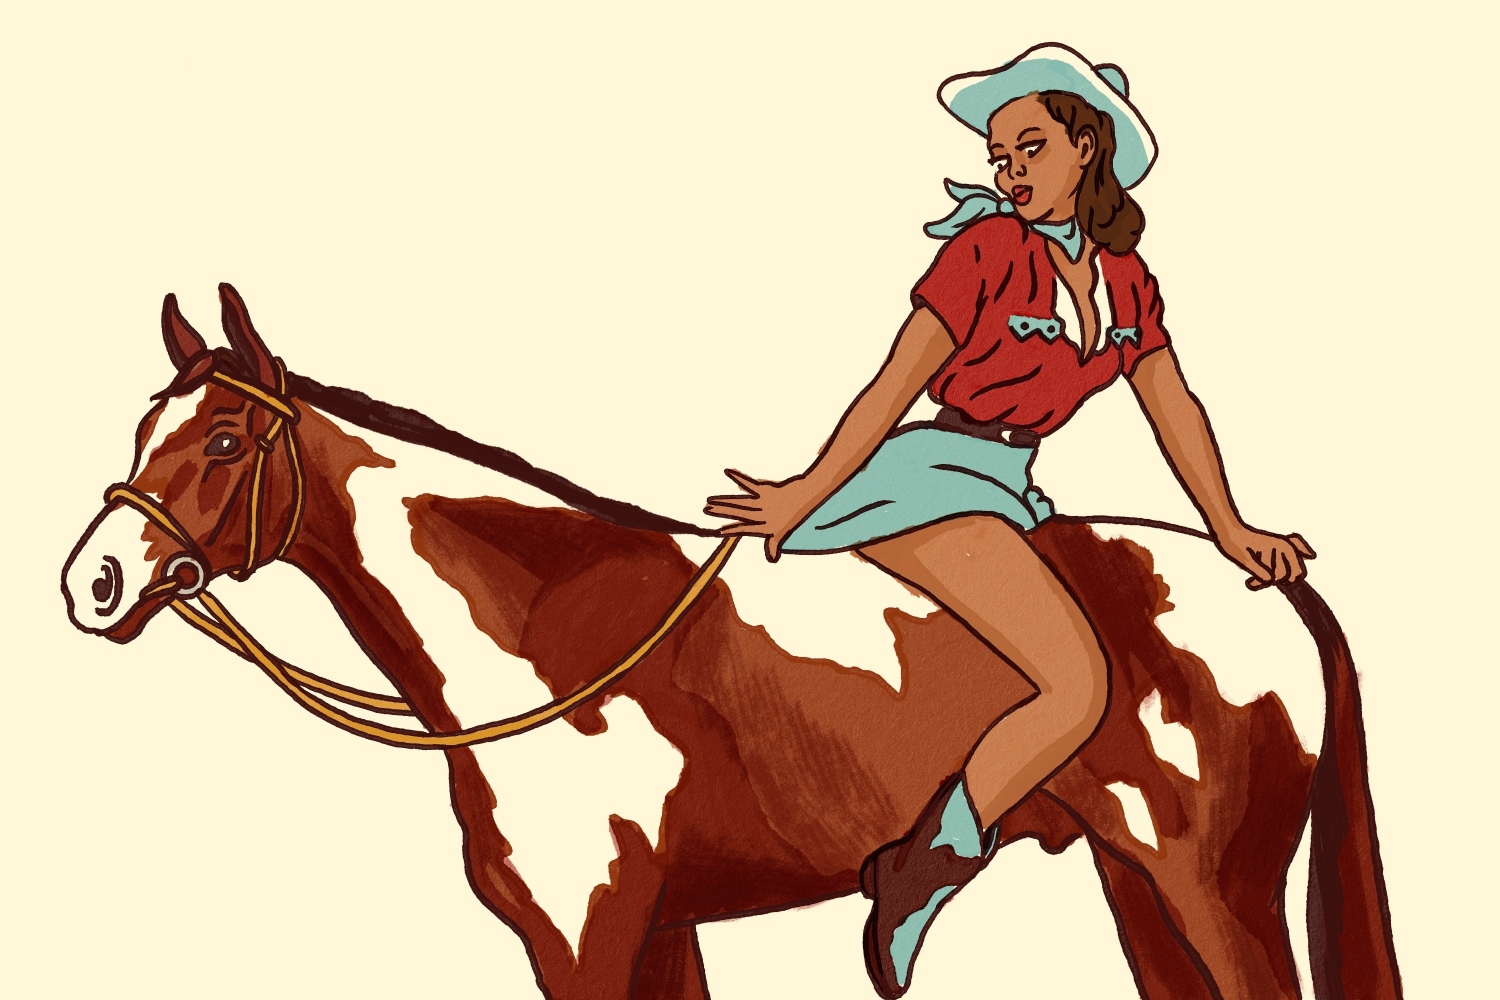 Booty redbone riding reverse cowgirl